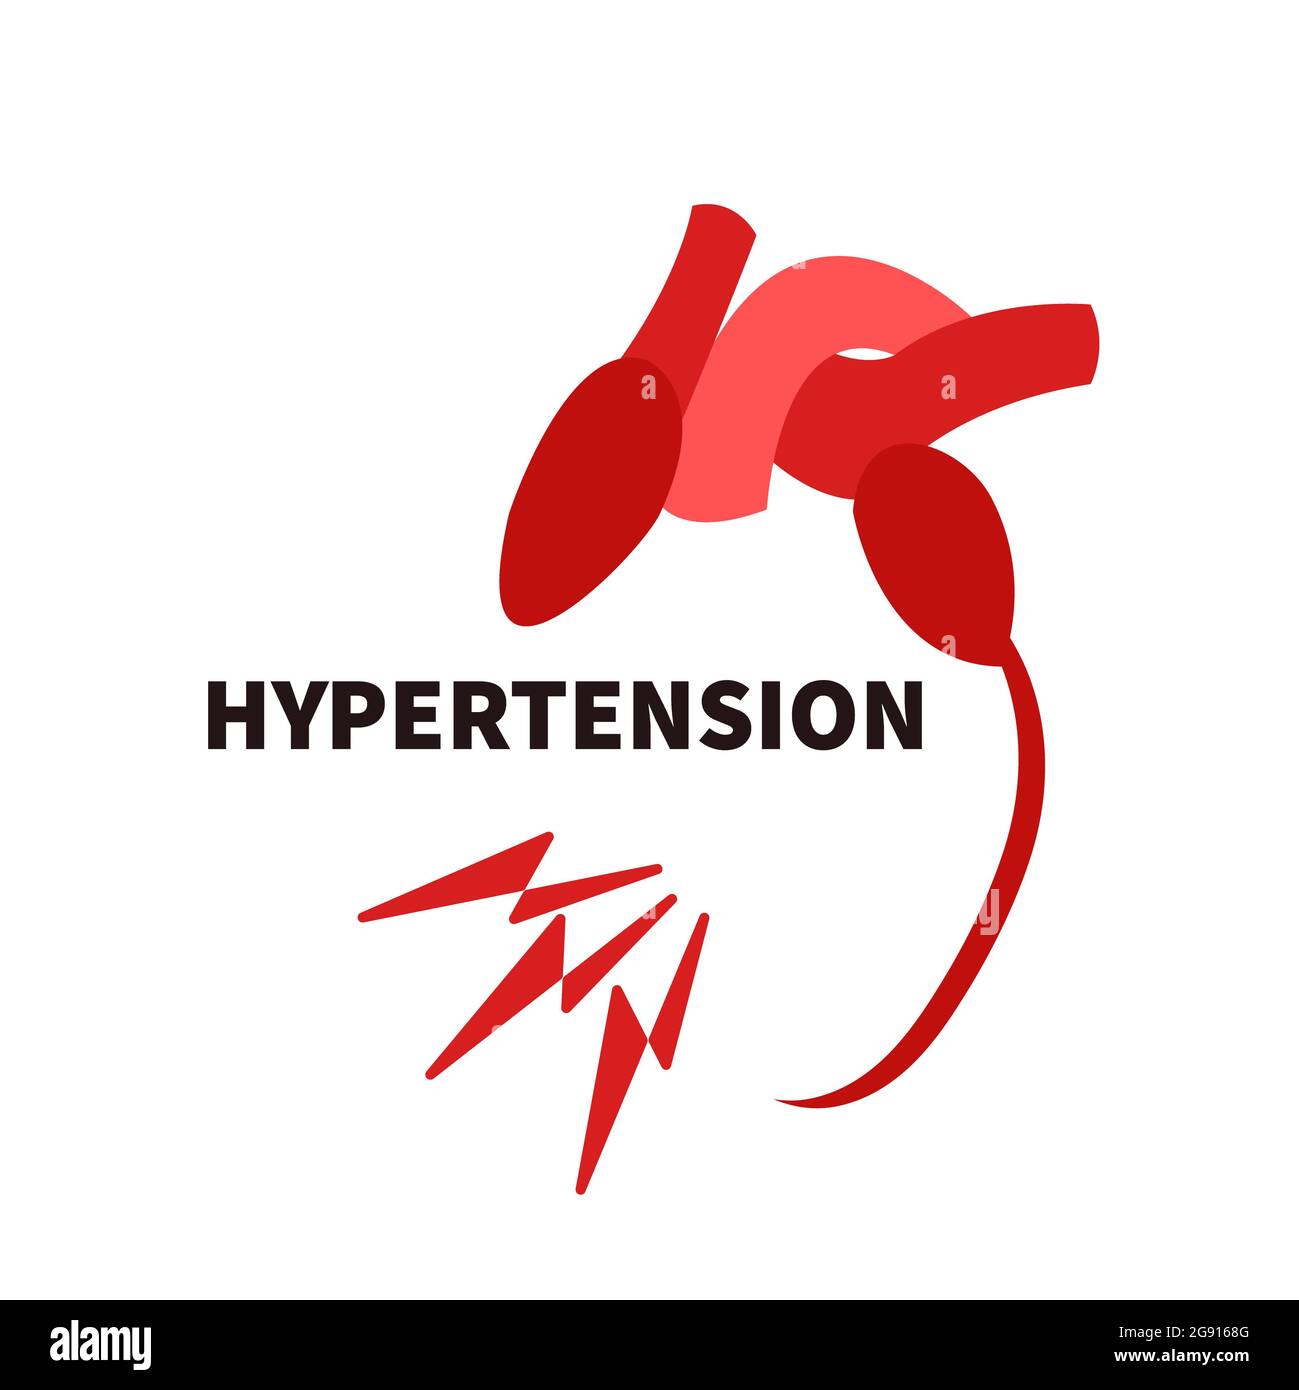 Hypertension, illustration conceptuelle Banque D'Images